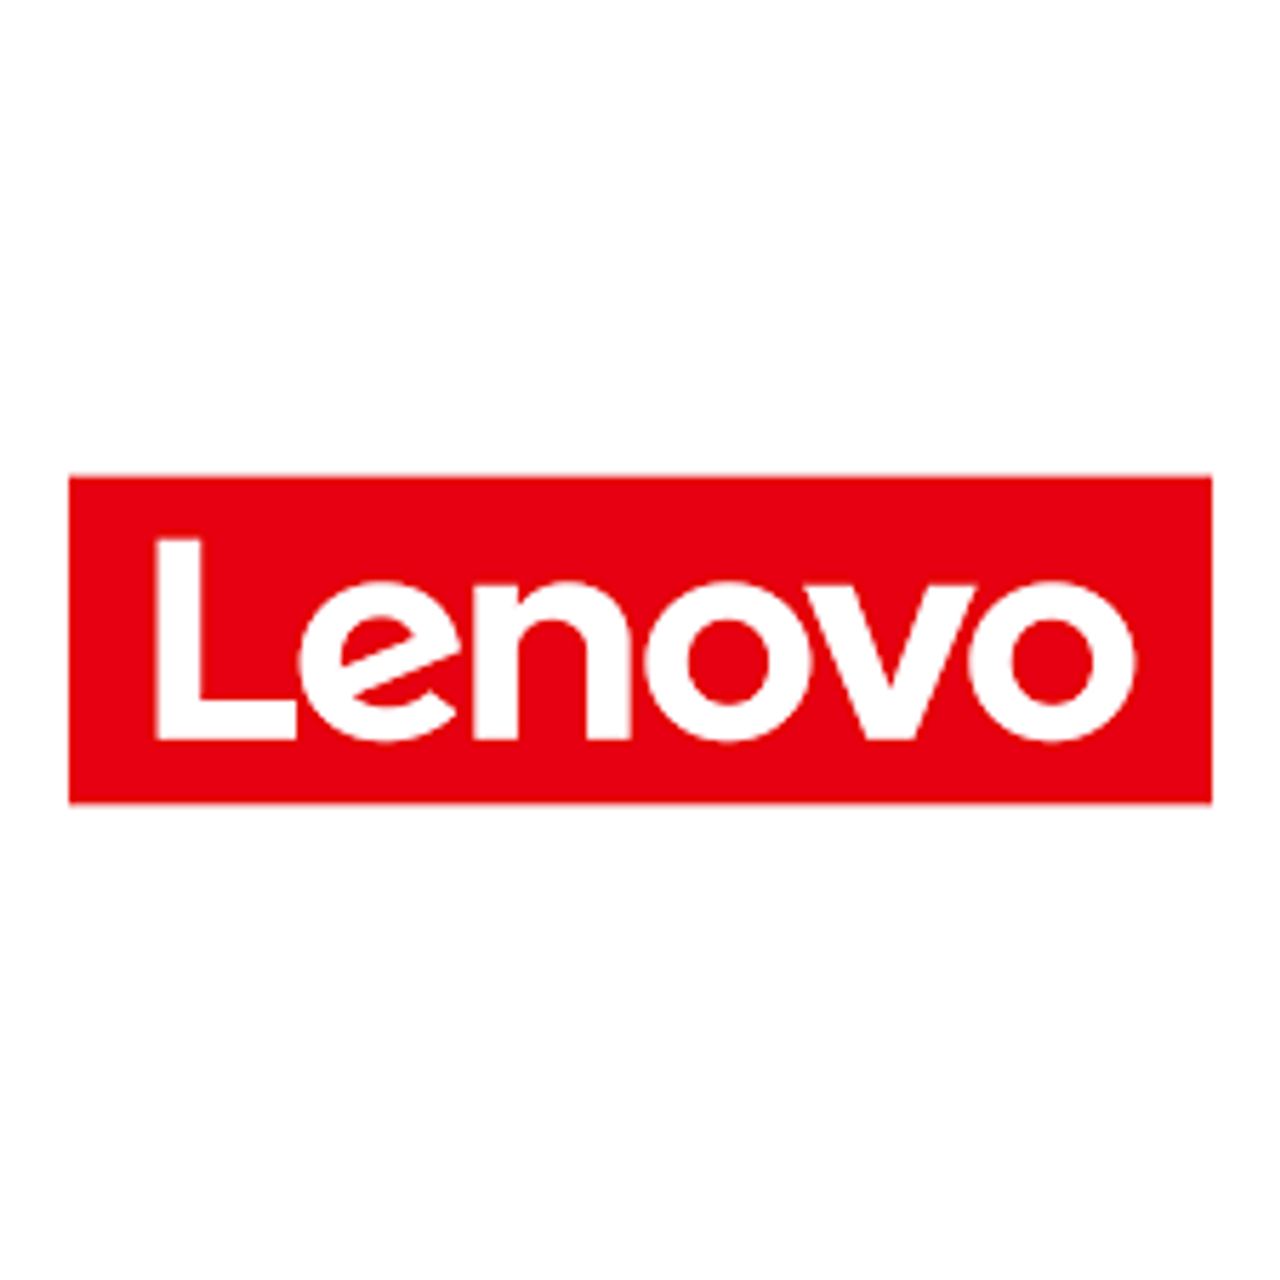 Lenovo - Open Source 600 GB Hard Drive - 2.5" Internal - SAS (12Gb/s SAS)